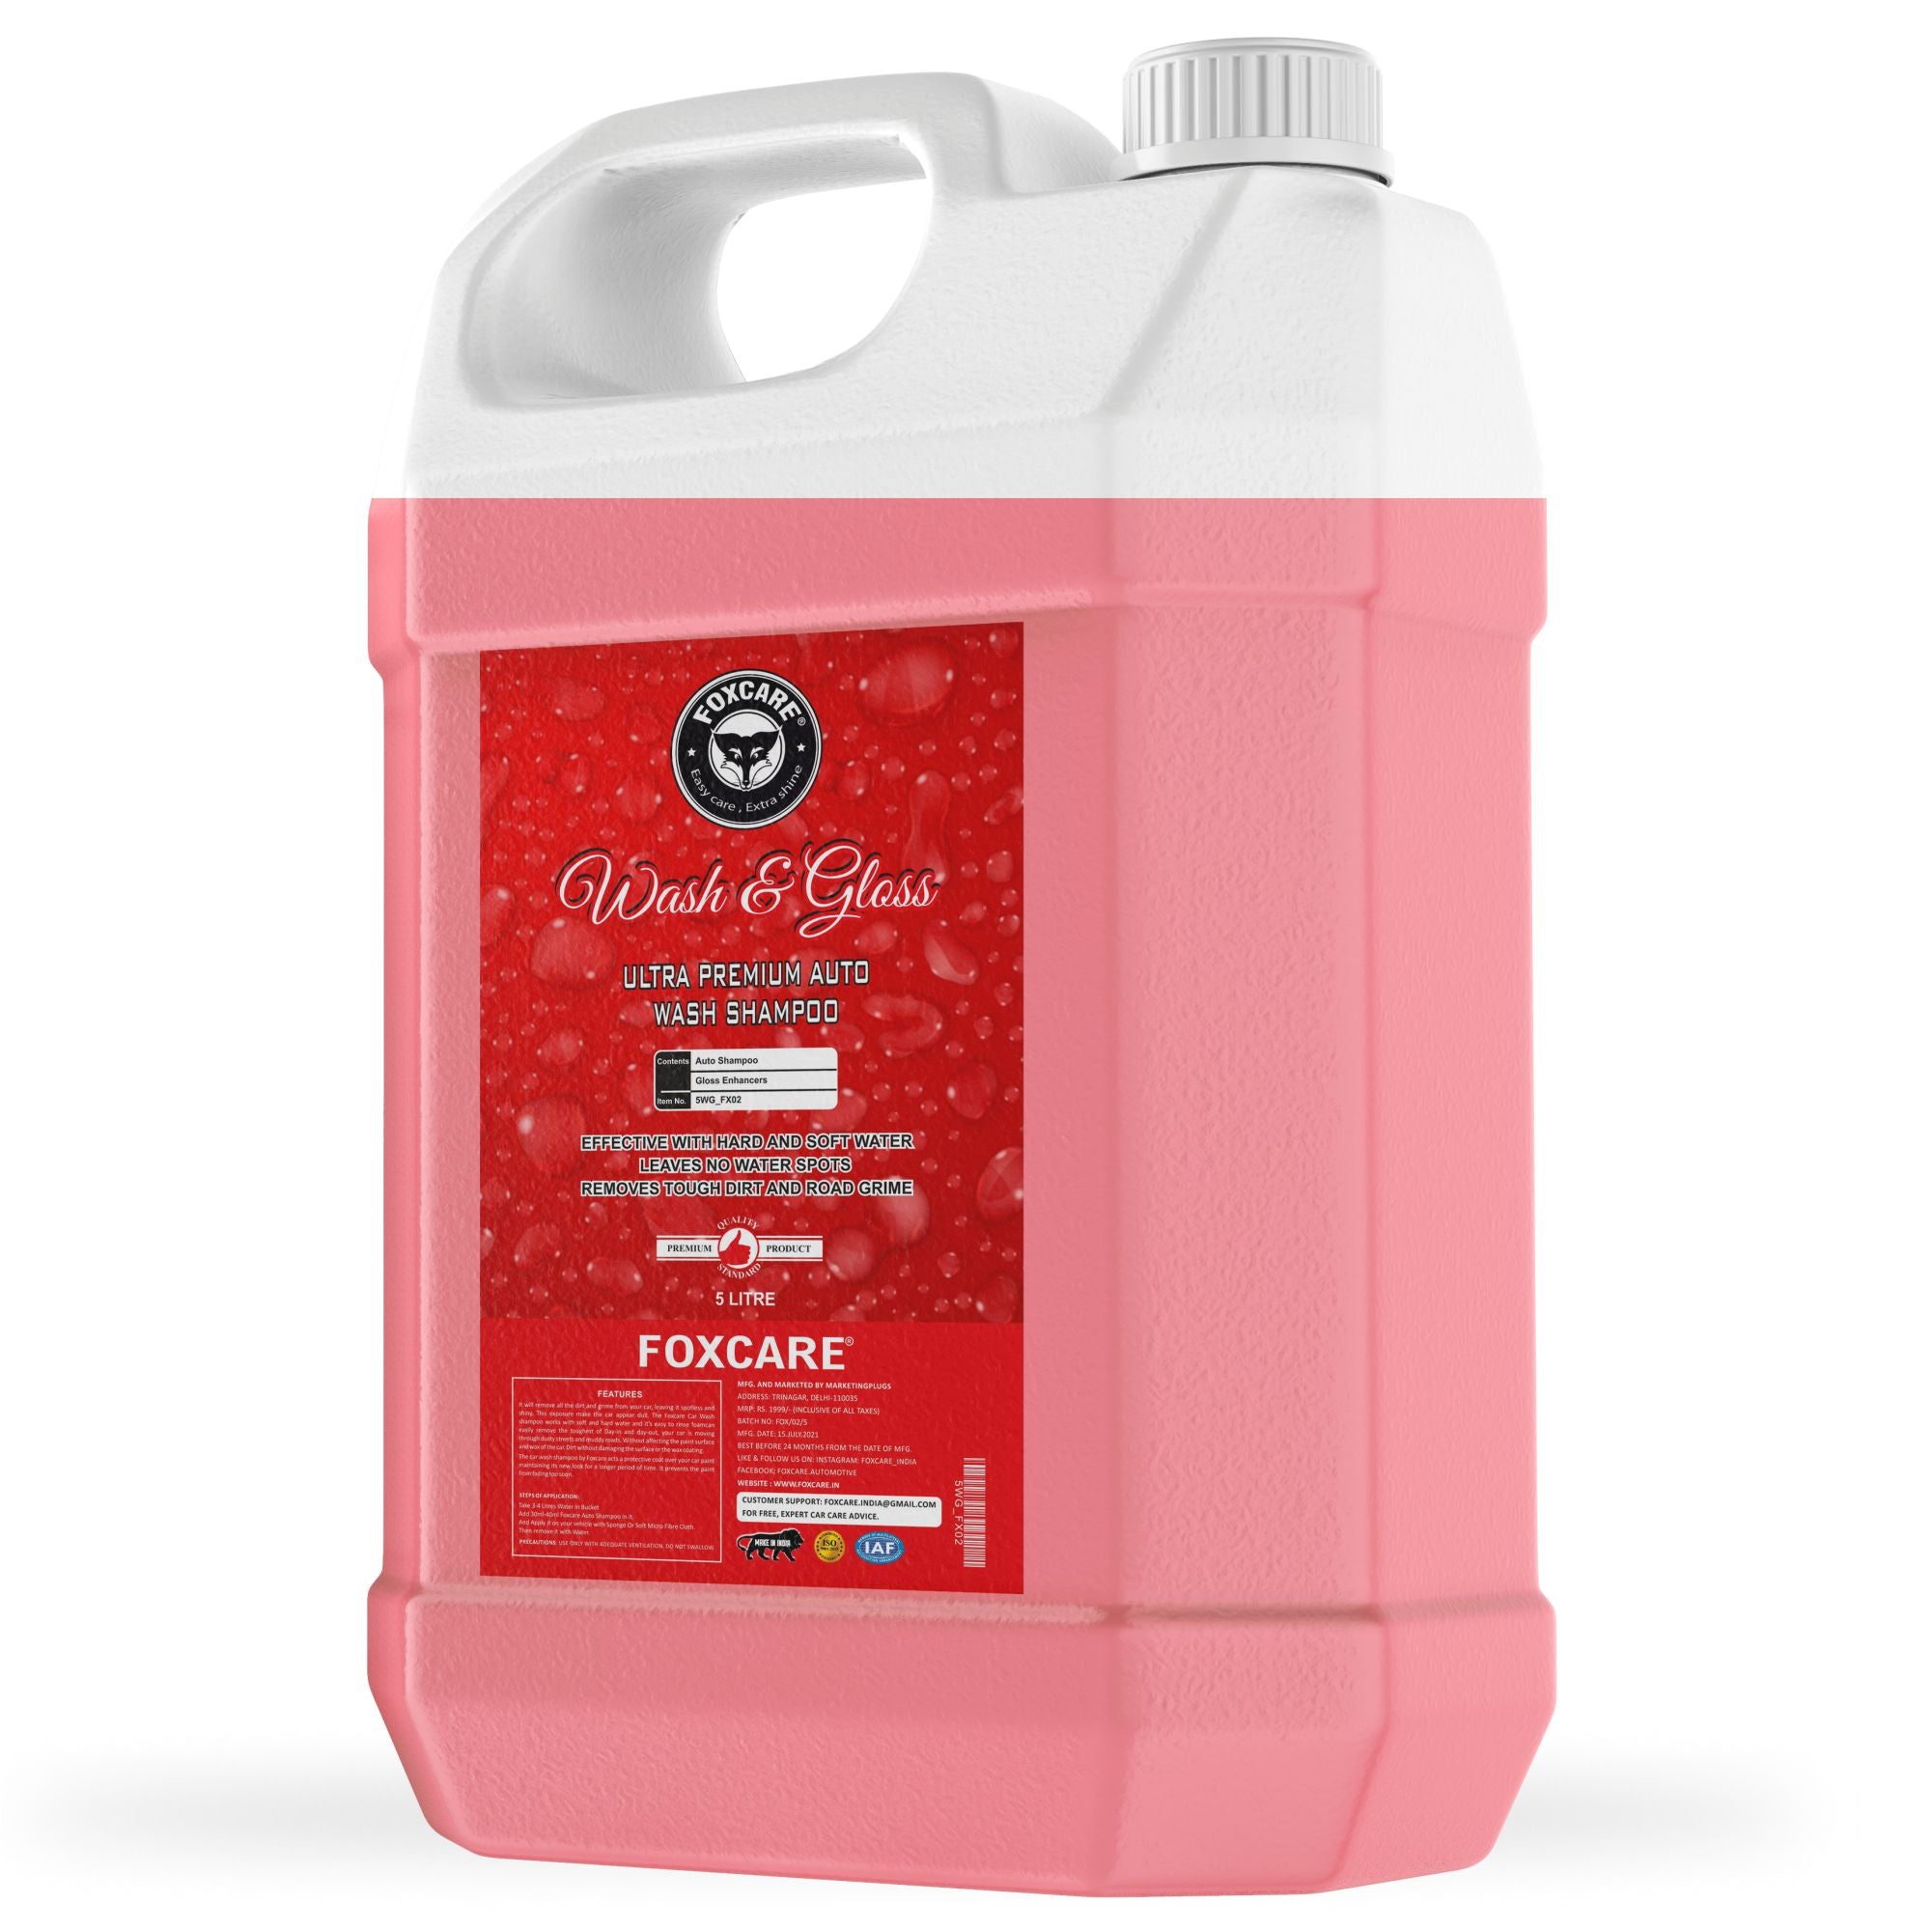 Foxcare Wash & Gloss - Ultra Premium Auto wash Shampoo (5 KG)